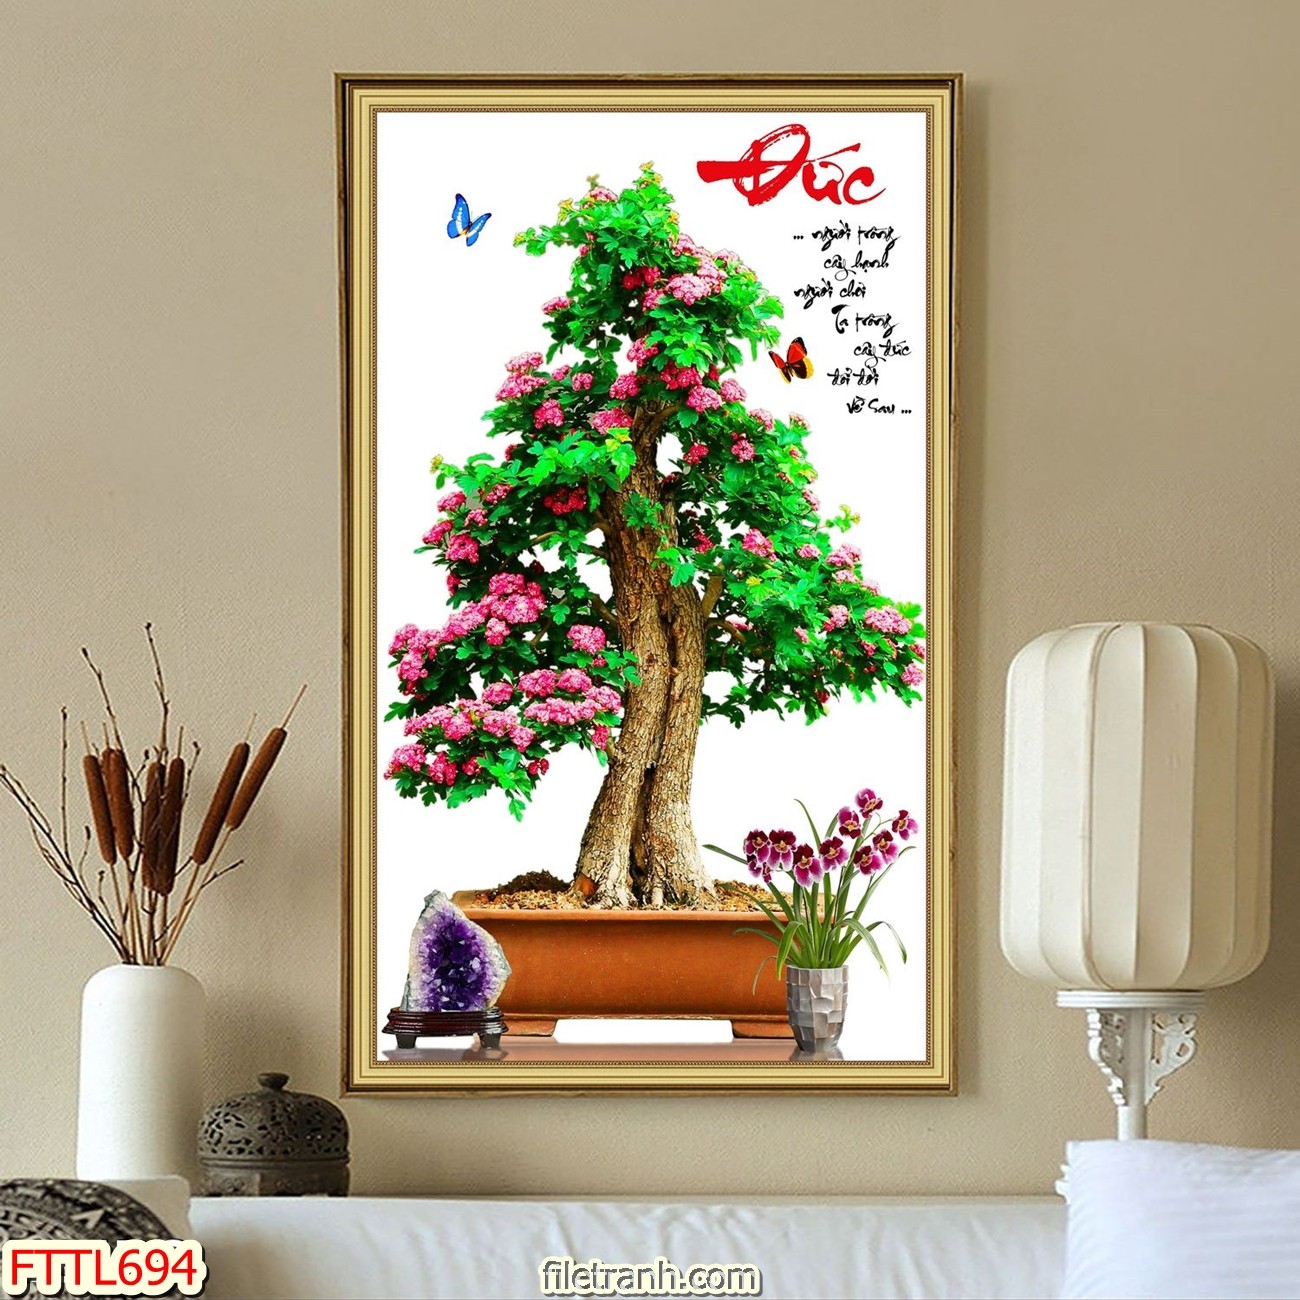 https://filetranh.com/file-tranh-chau-mai-bonsai/file-tranh-chau-mai-bonsai-fttl694.html